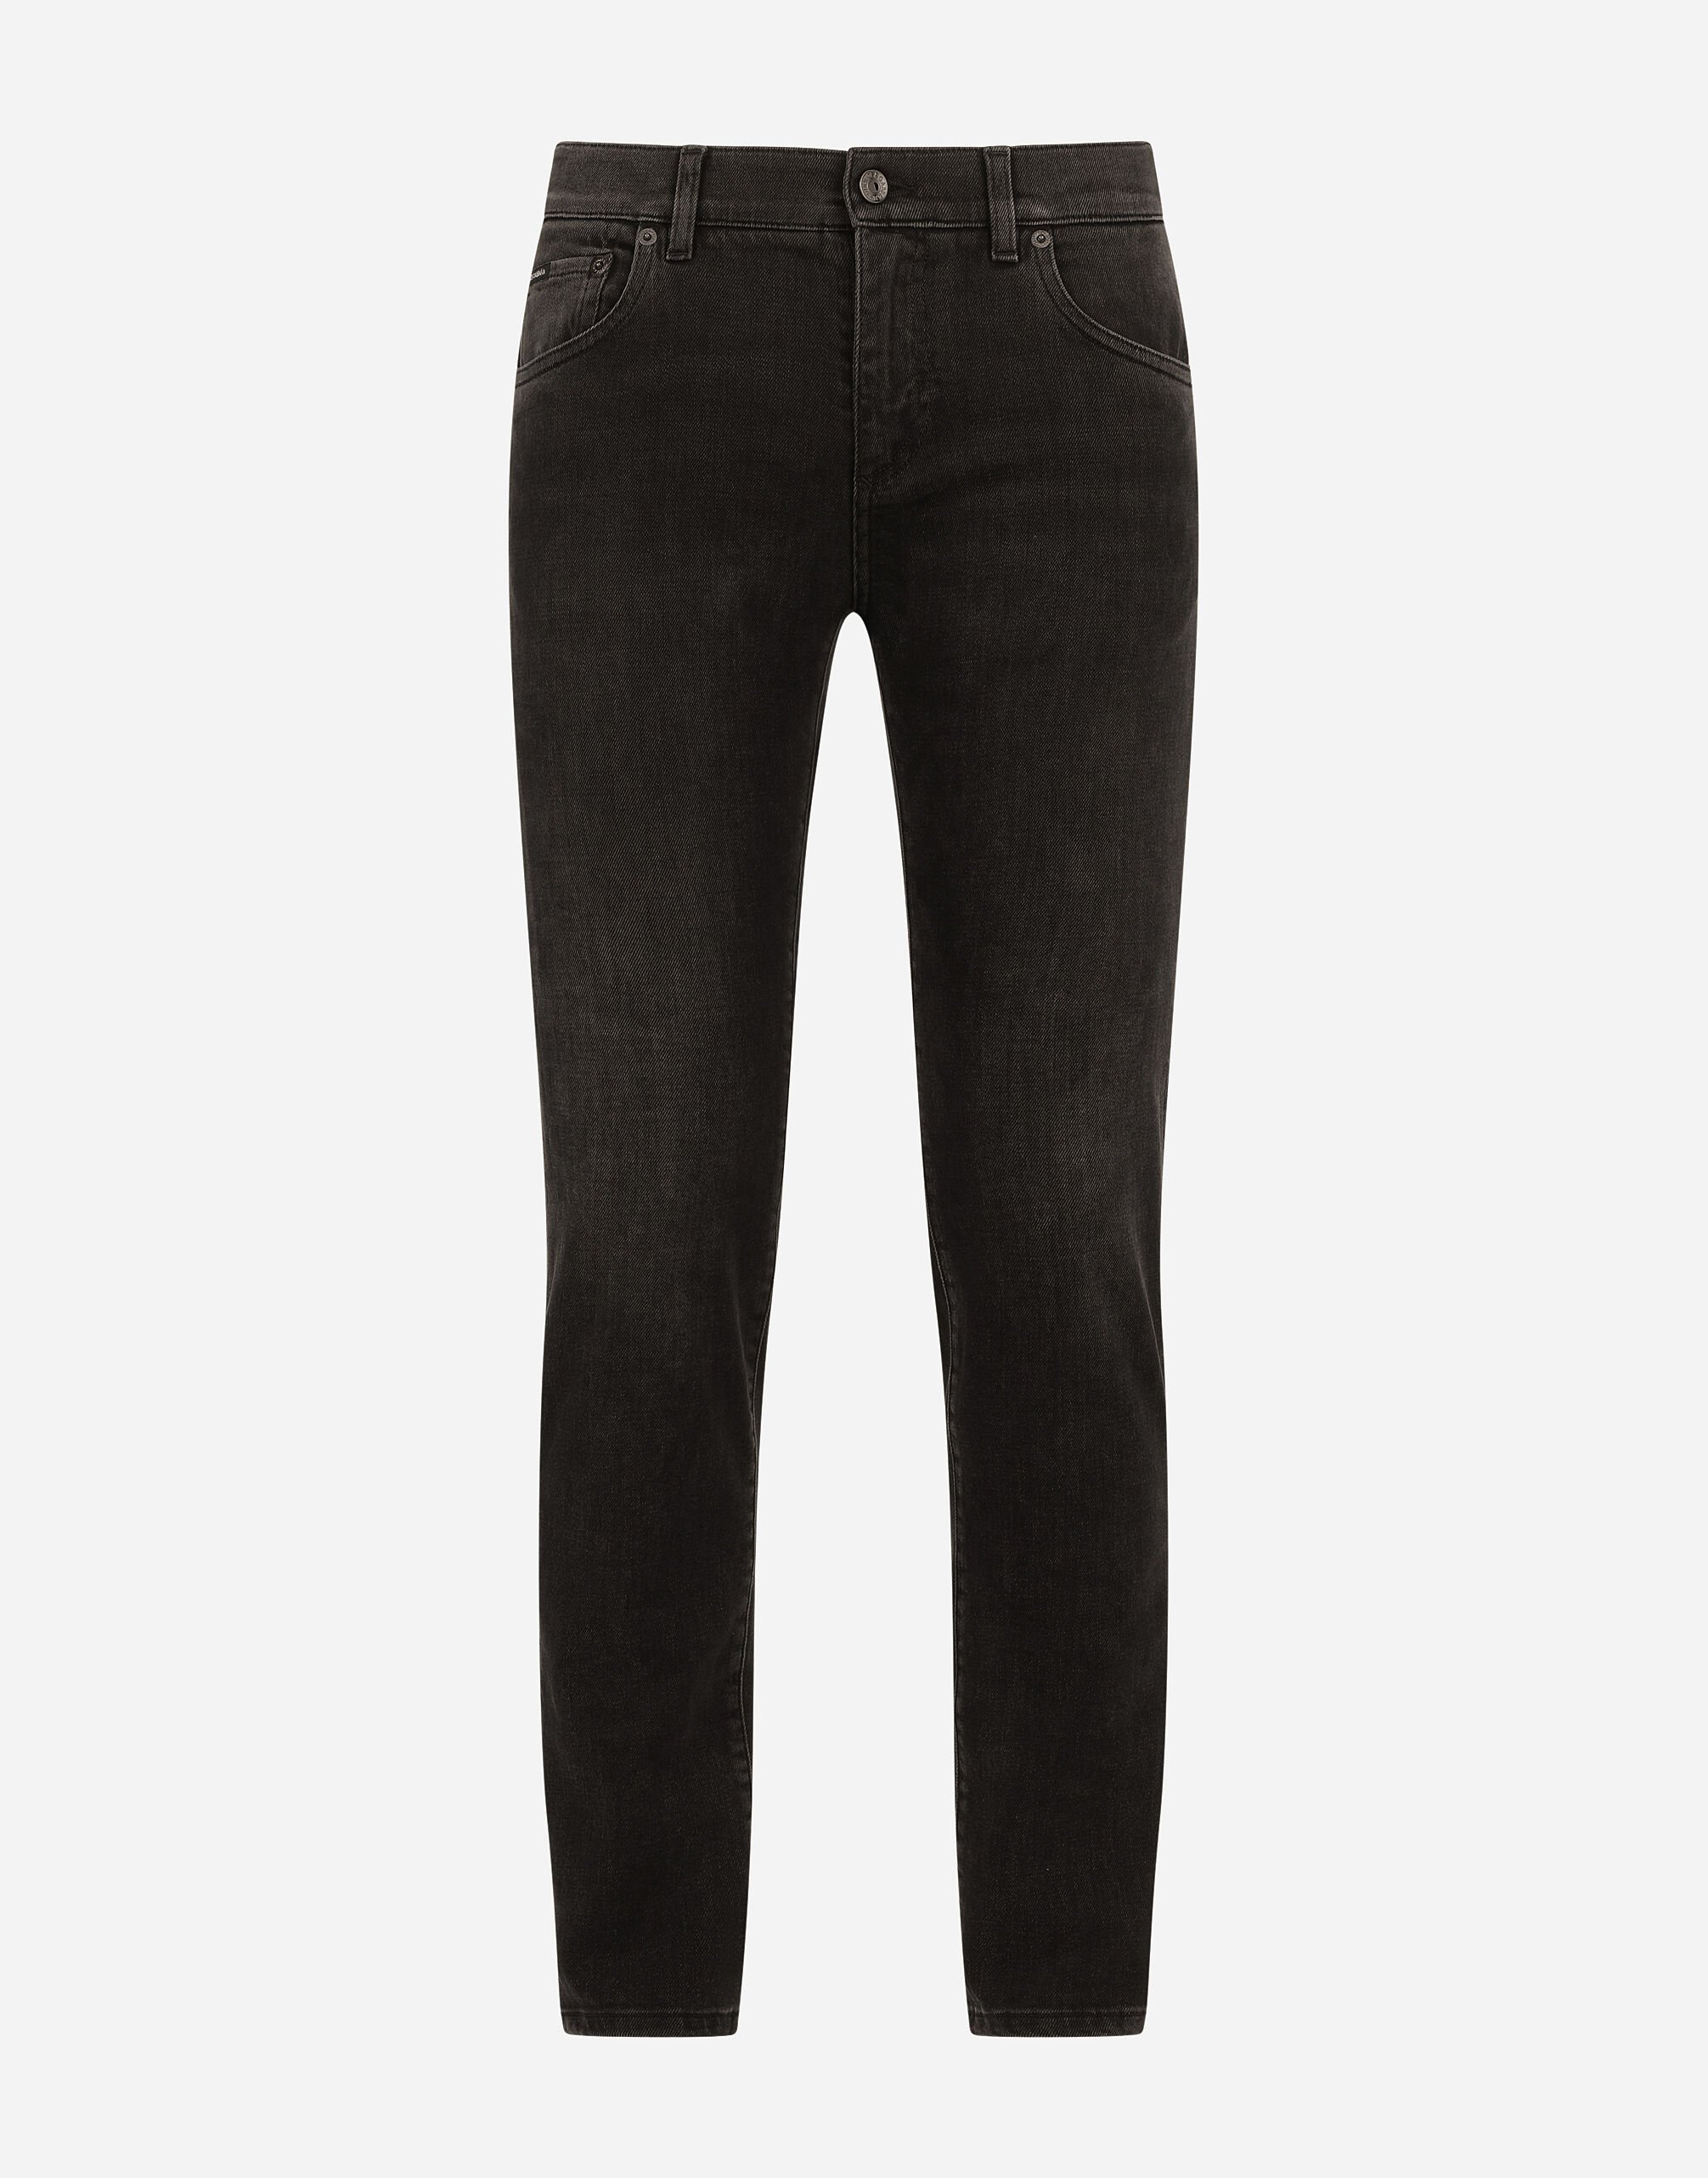 Dolce & Gabbana Black wash skinny stretch jeans Multicolor GY07LDG8ET2